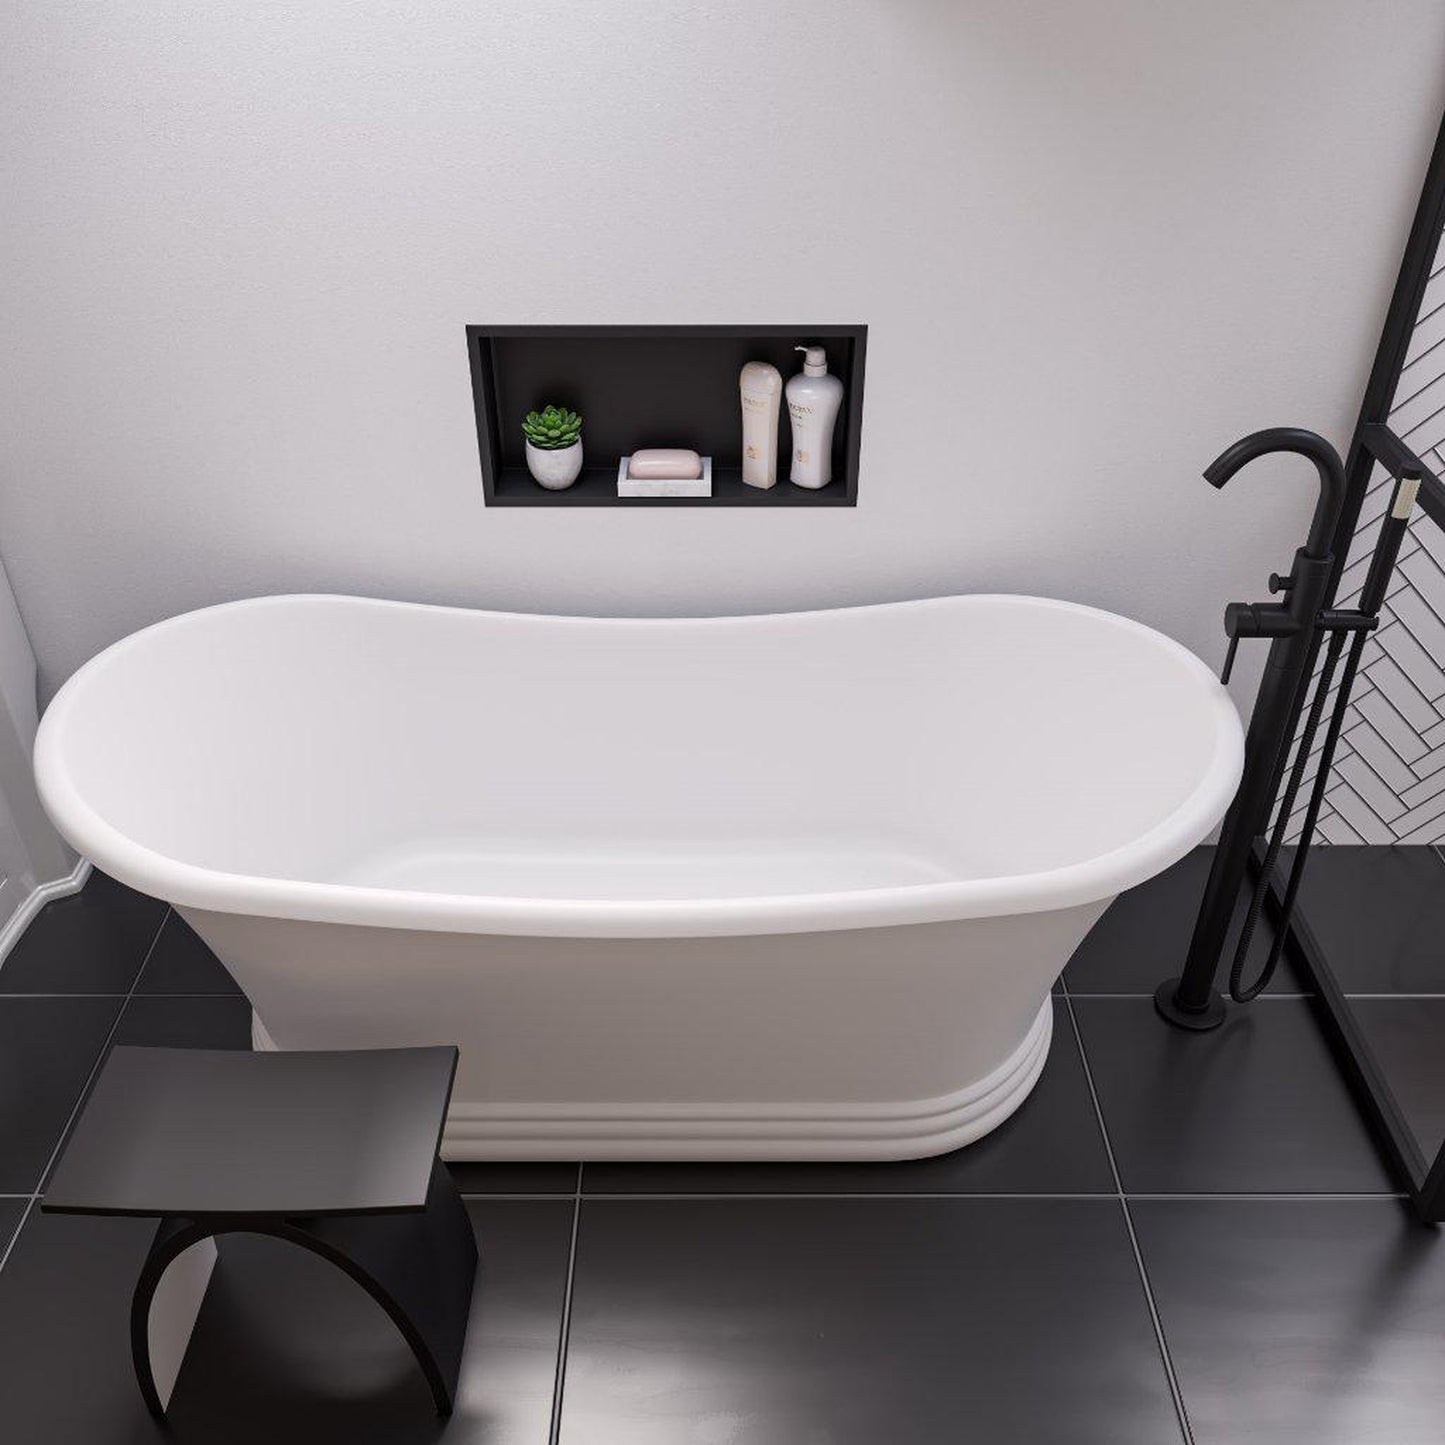 ALFI Brand AB9950 67" One Person Freestanding White Matte Pedestal Solid Surface Resin Bathtub